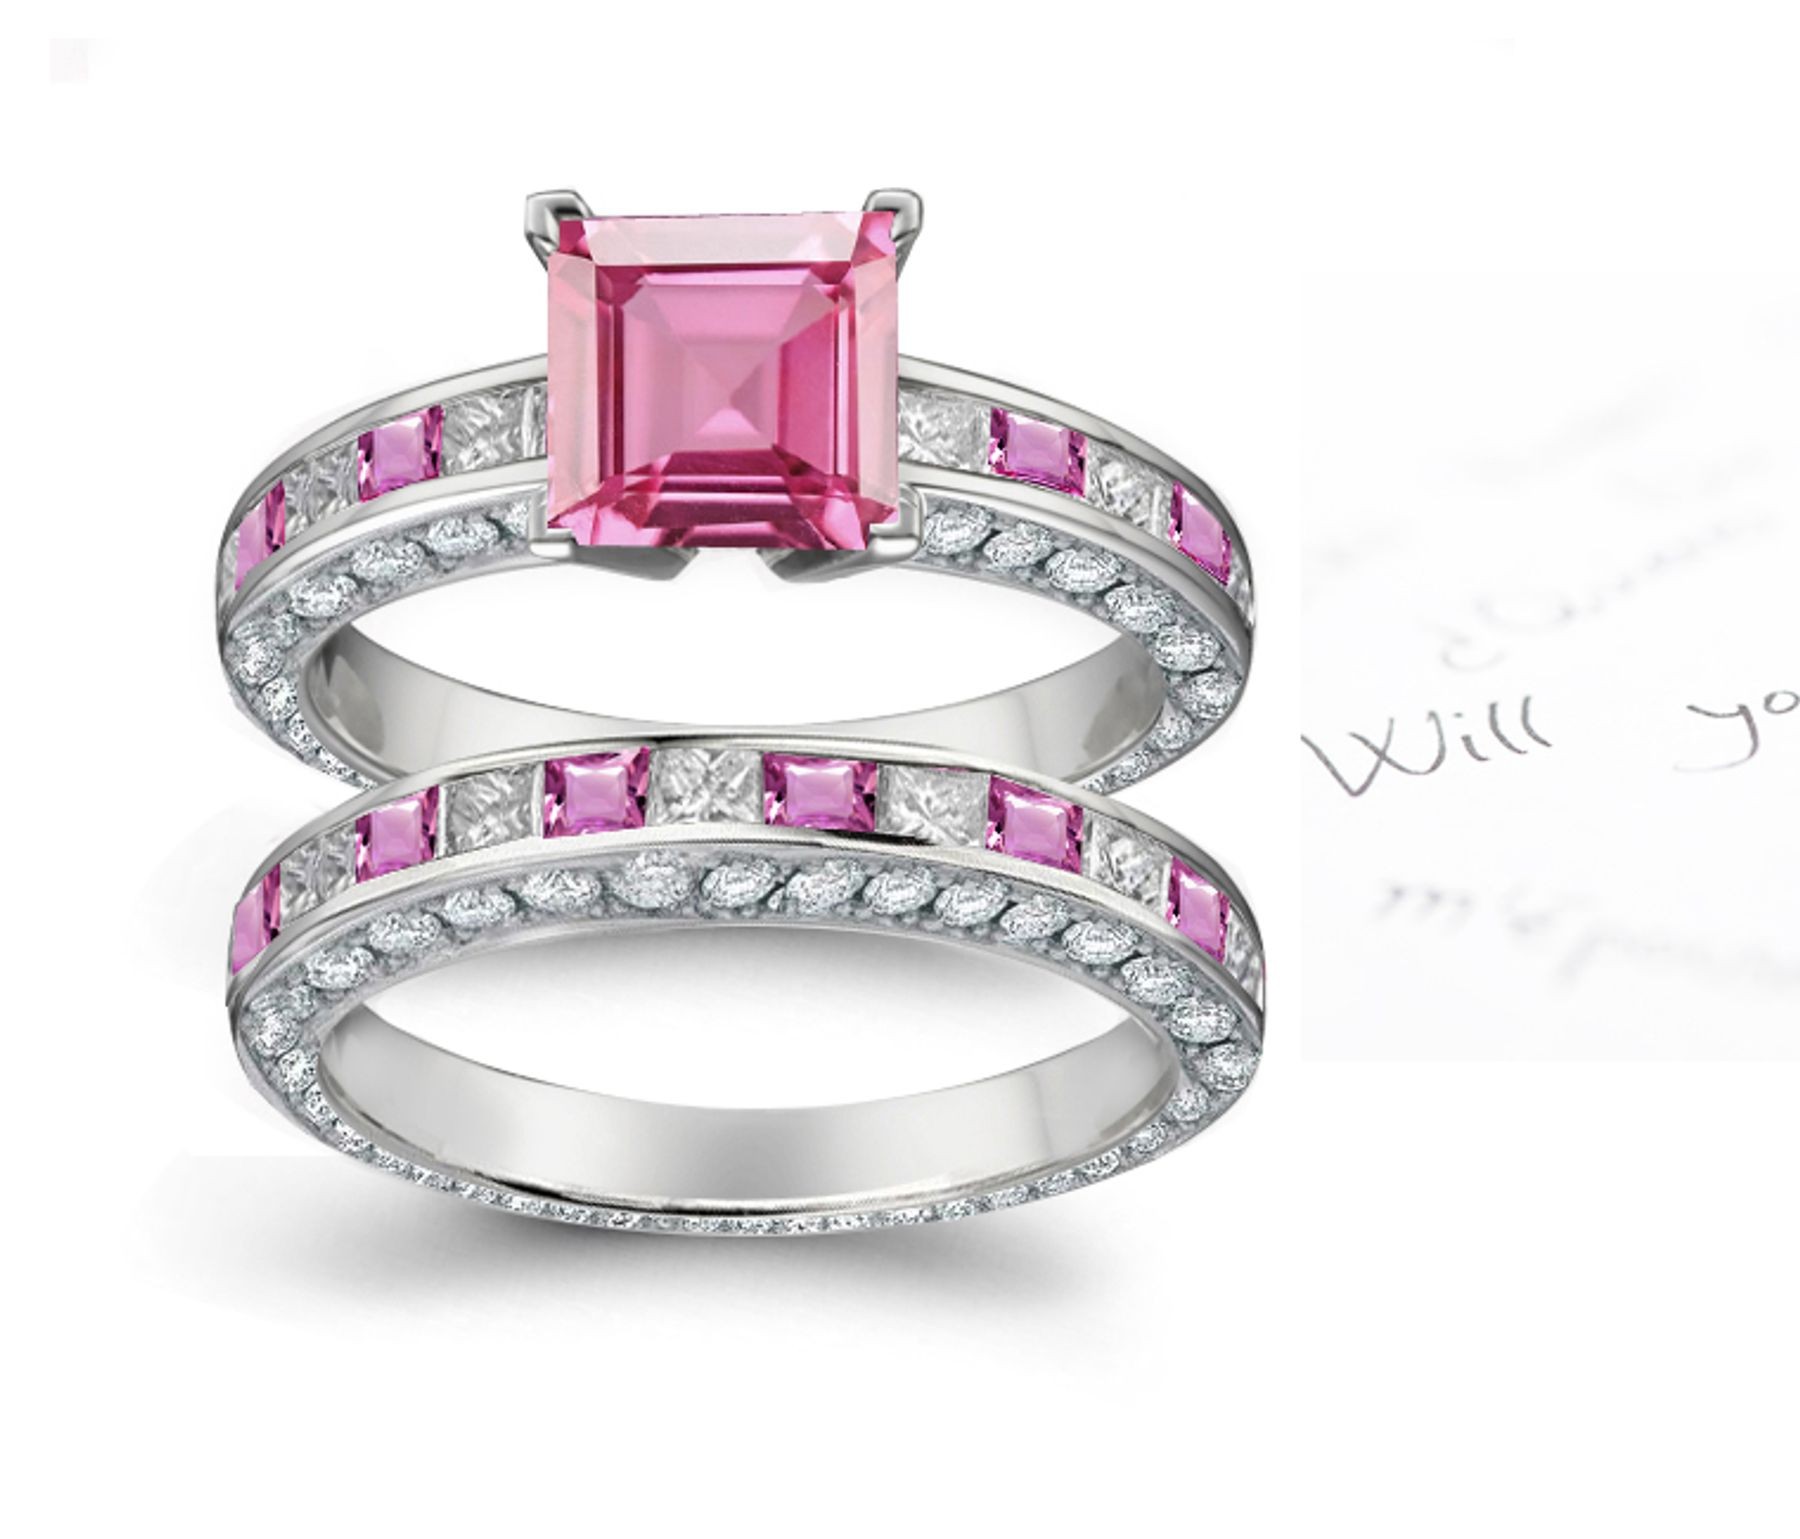 A timeless, design with a deep pink 1.0 carat Splendid Sapphire & halo of well-cut White Diamonds Splendid Sapphires